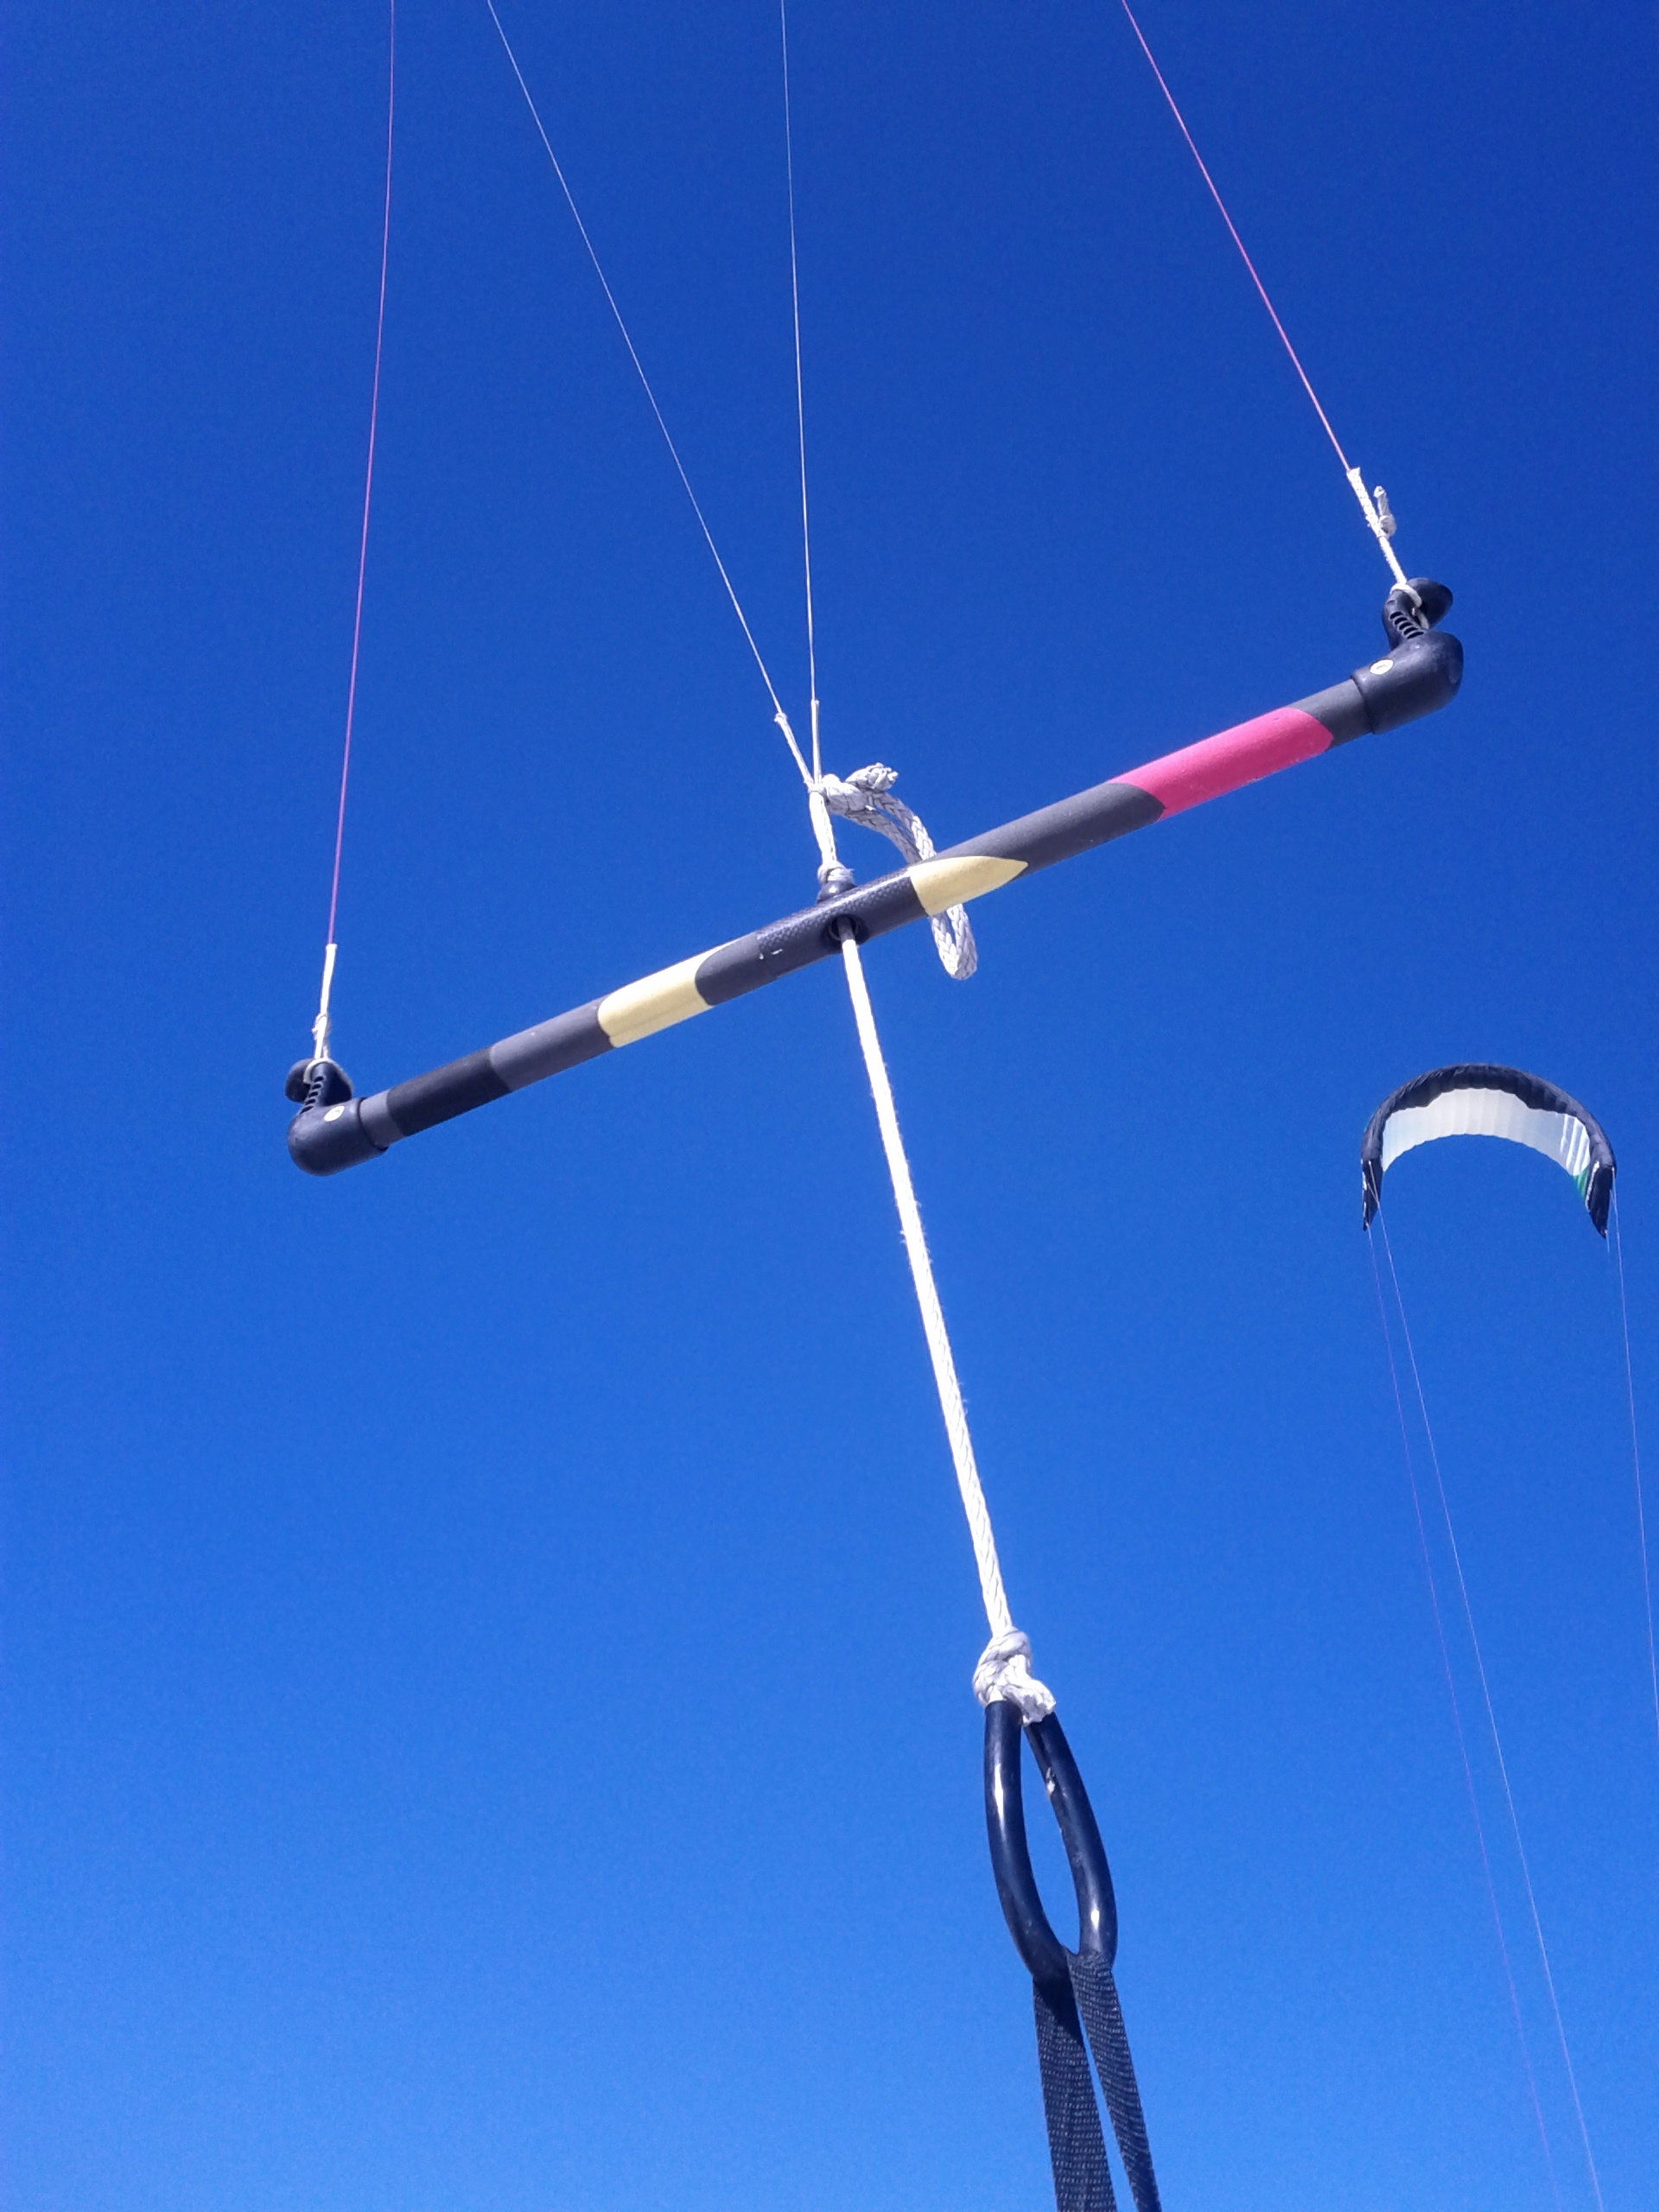 The world's simplest kite bar